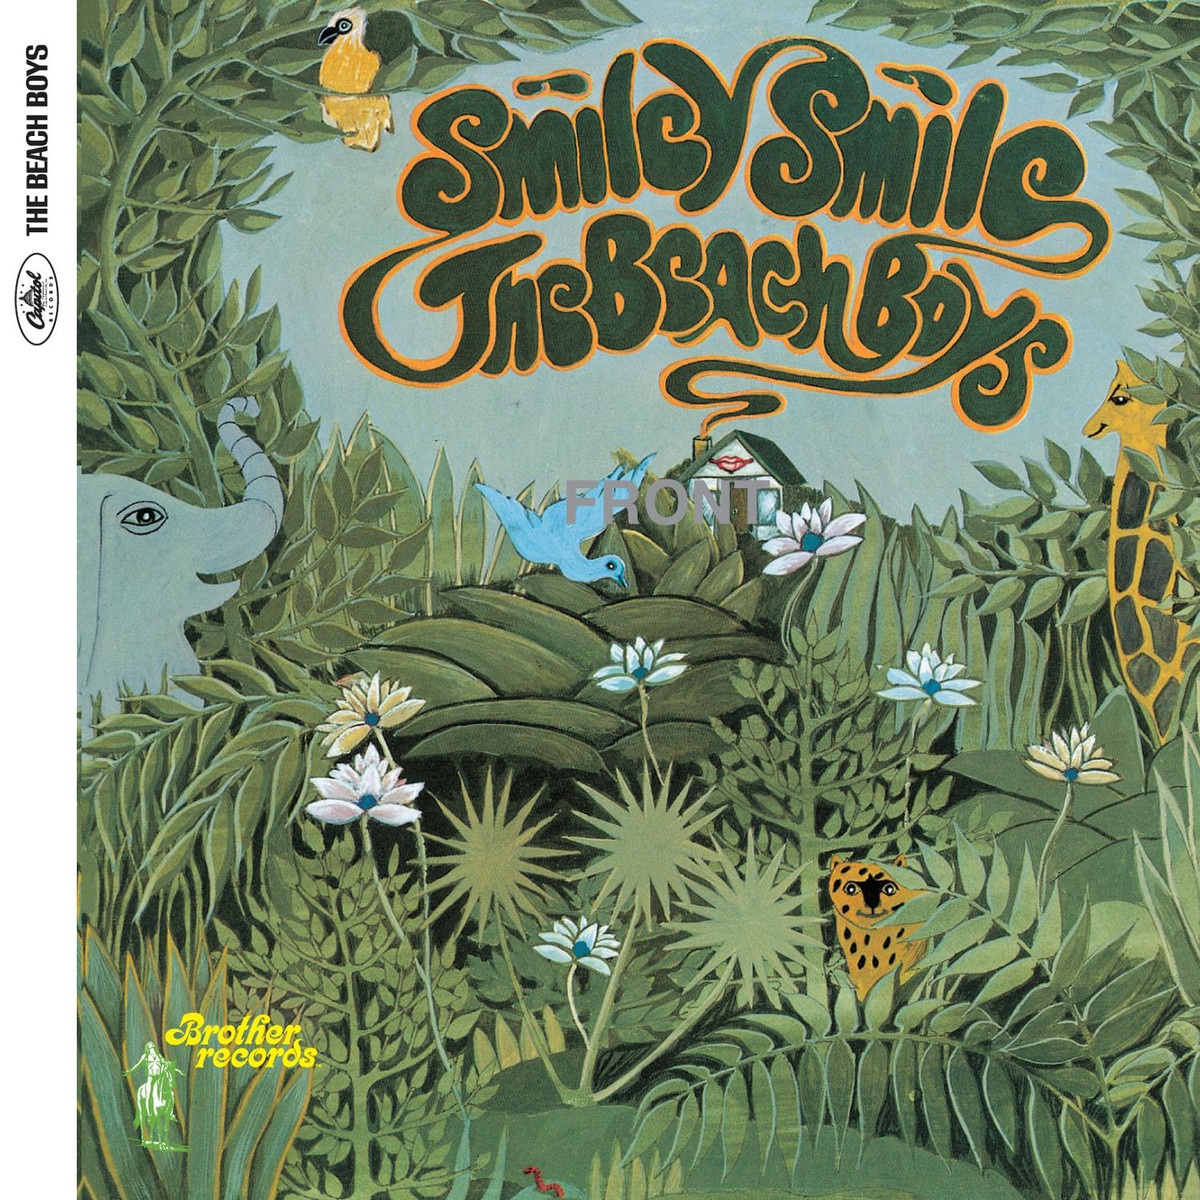 Smiley Smile (2001 - Remaster)